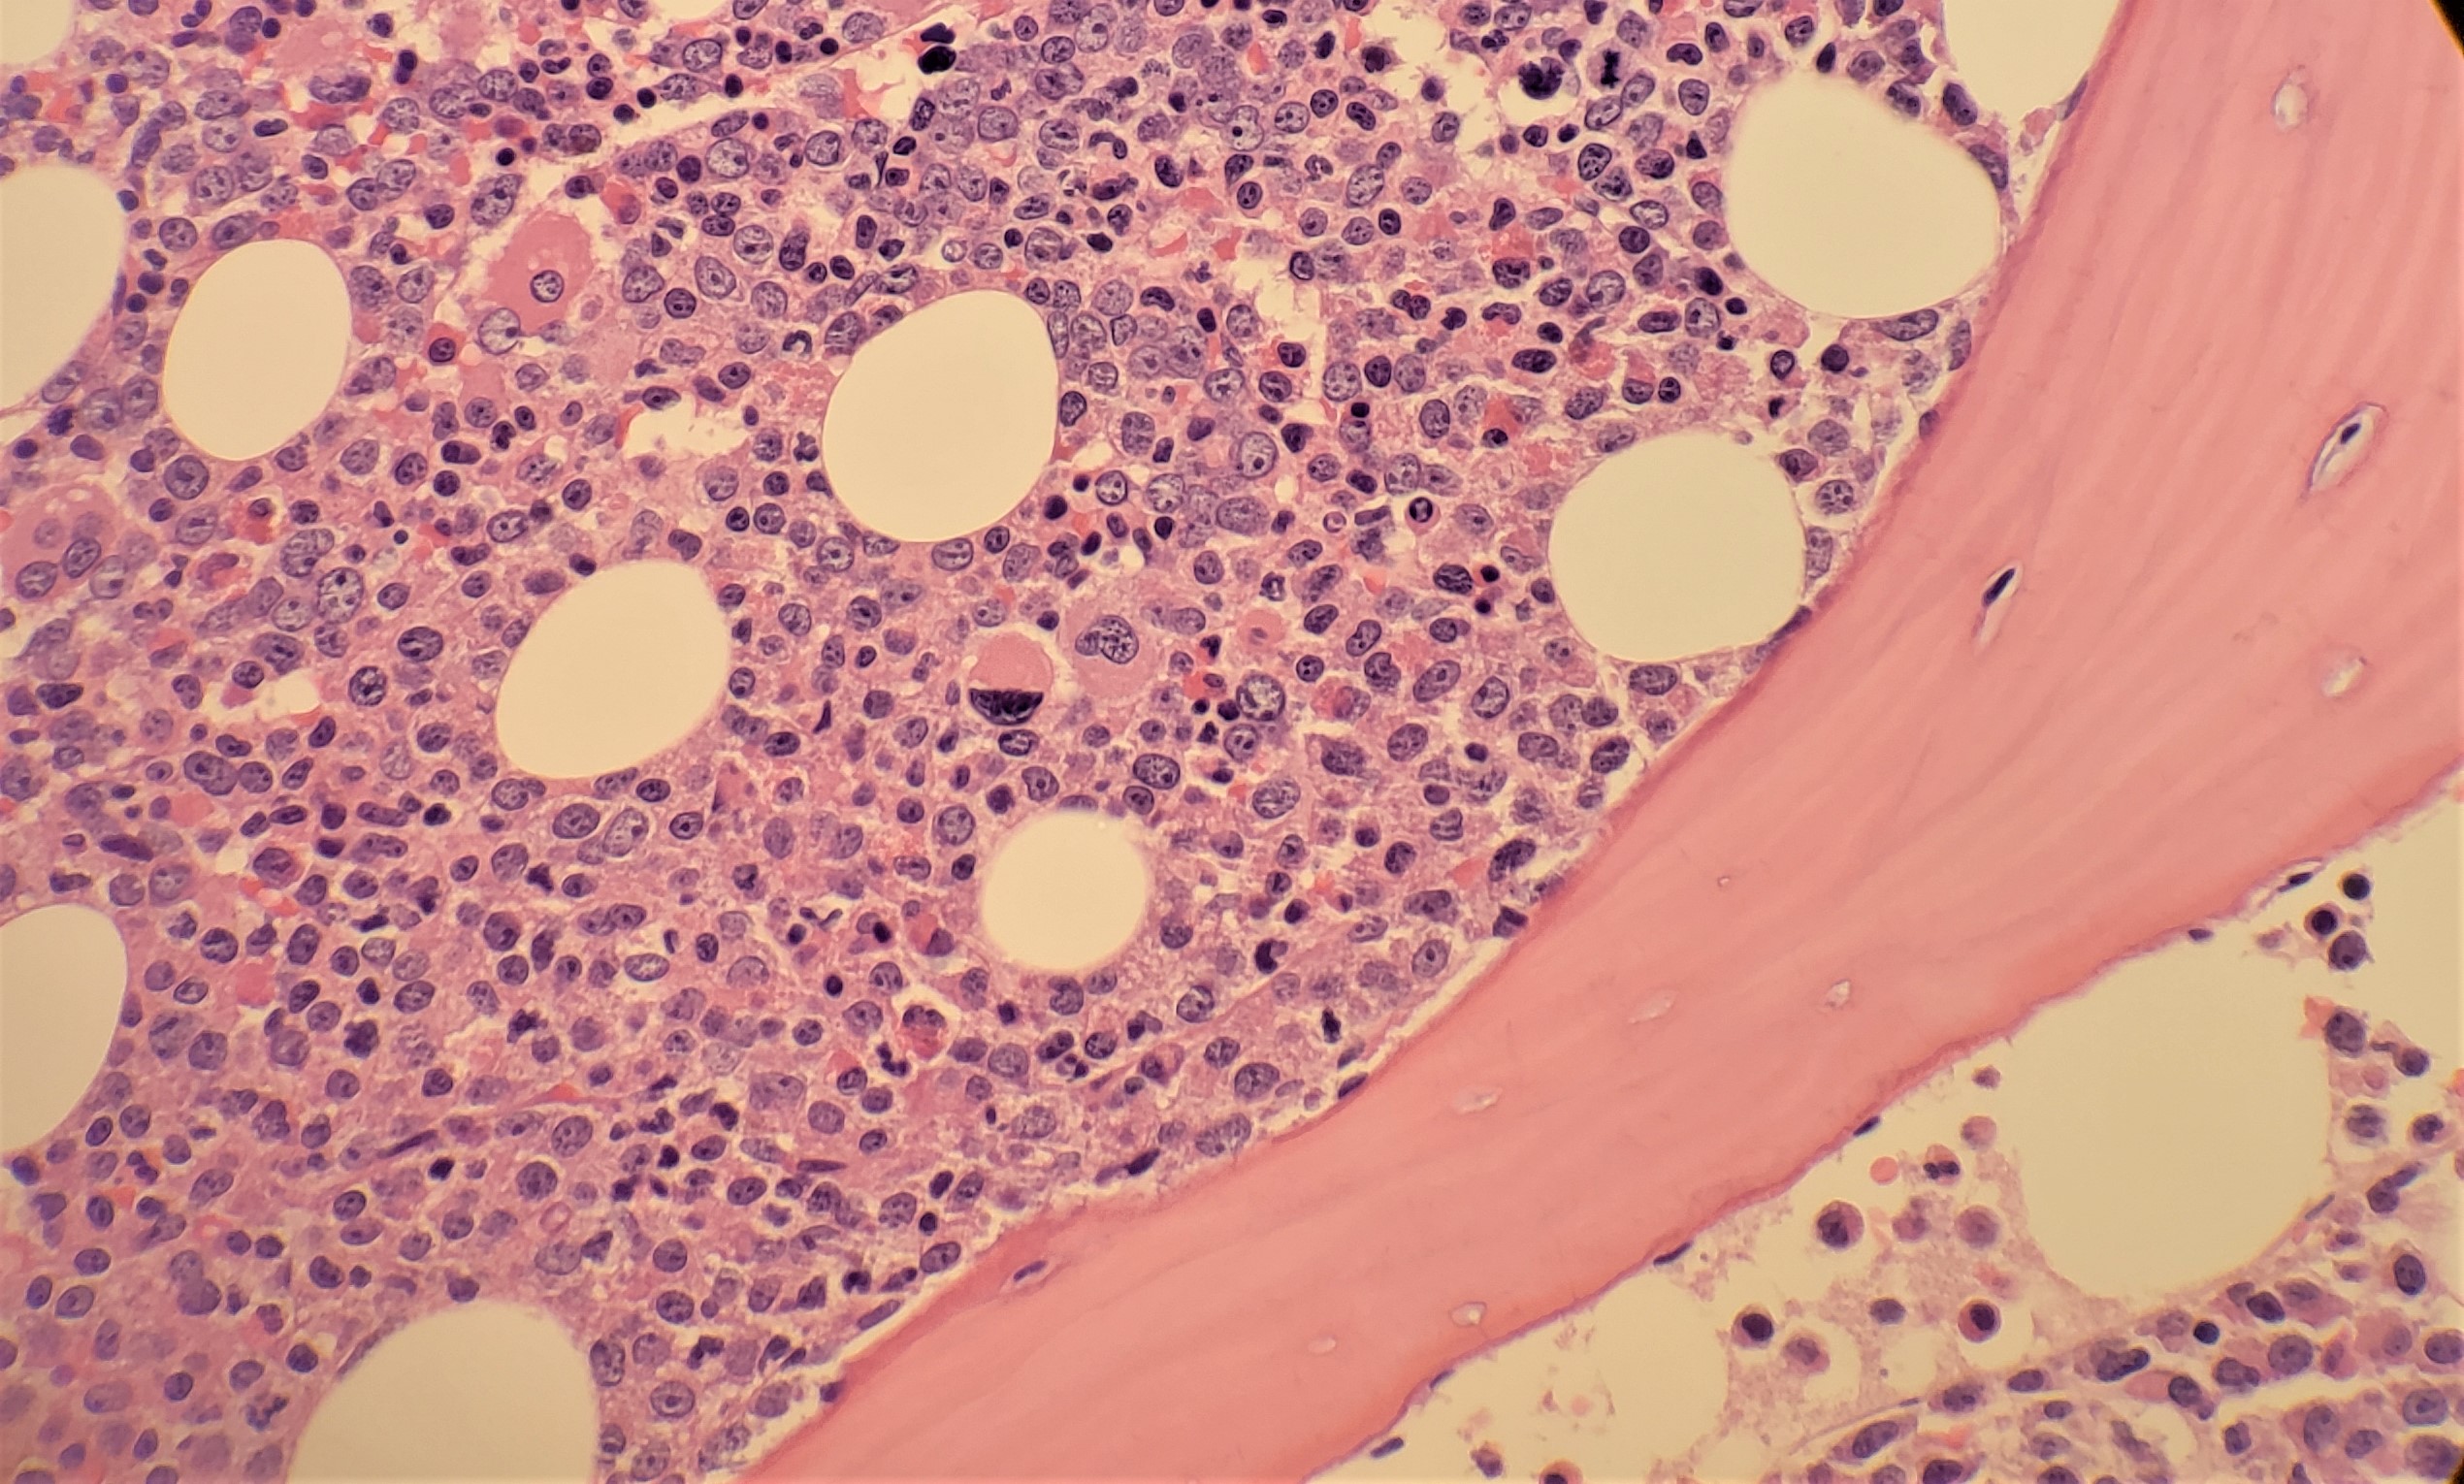 Bone marrow biopsy of Chronic Myeloid Leukemia showing hypercellularity and expansion of immature granulocytic paratrabecular cuff